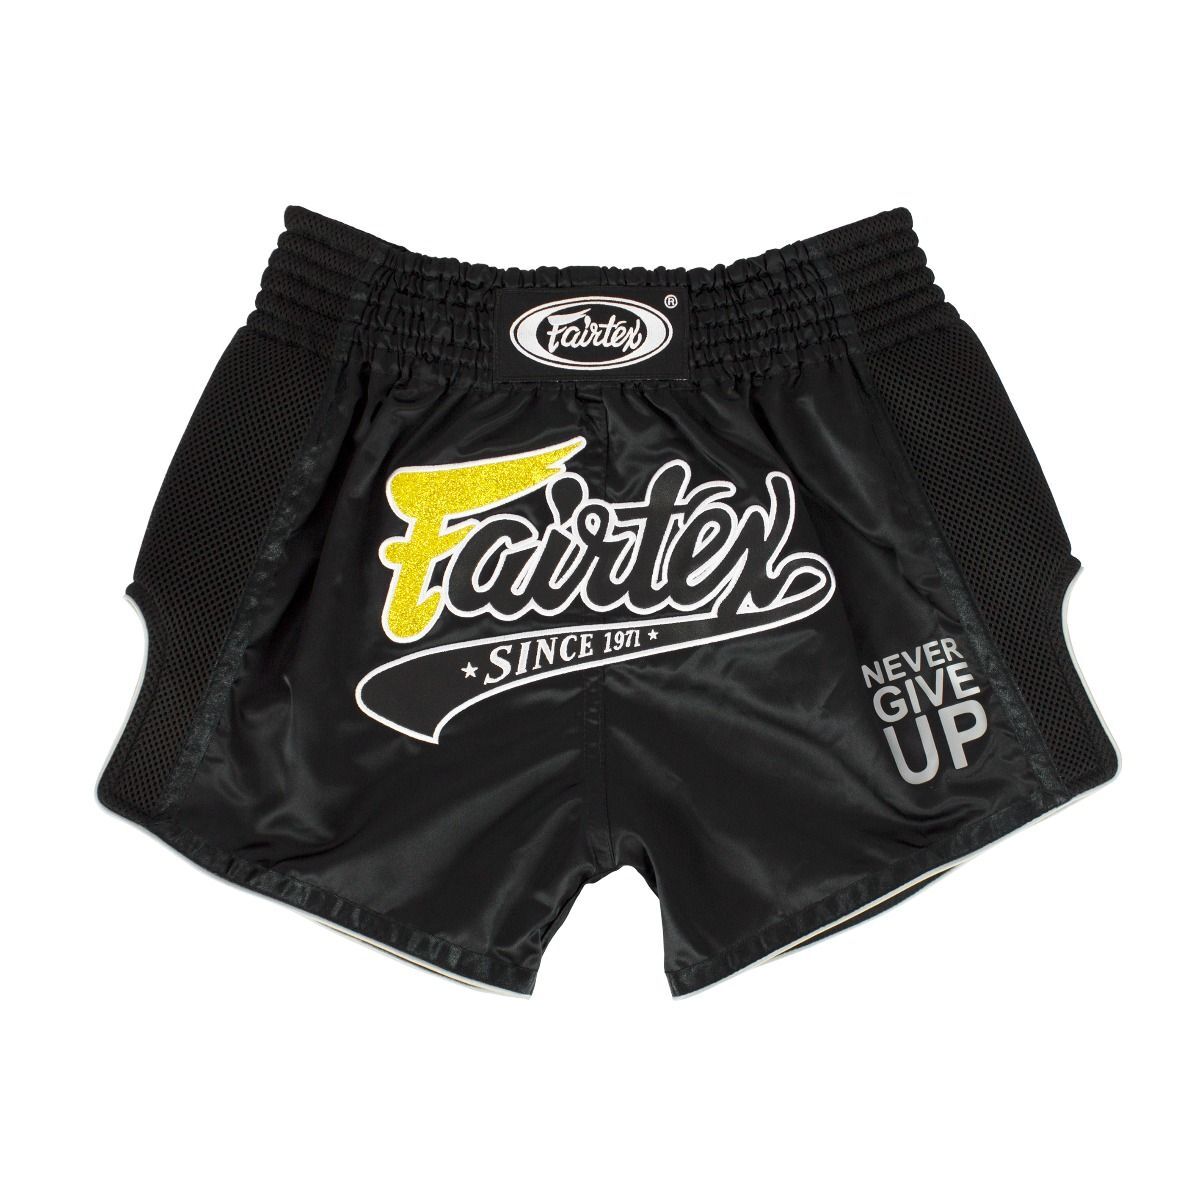 FAIRTEX Black Slim Cut Muay Thai Boxing Shorts (BS1708) - Extra Extra Large